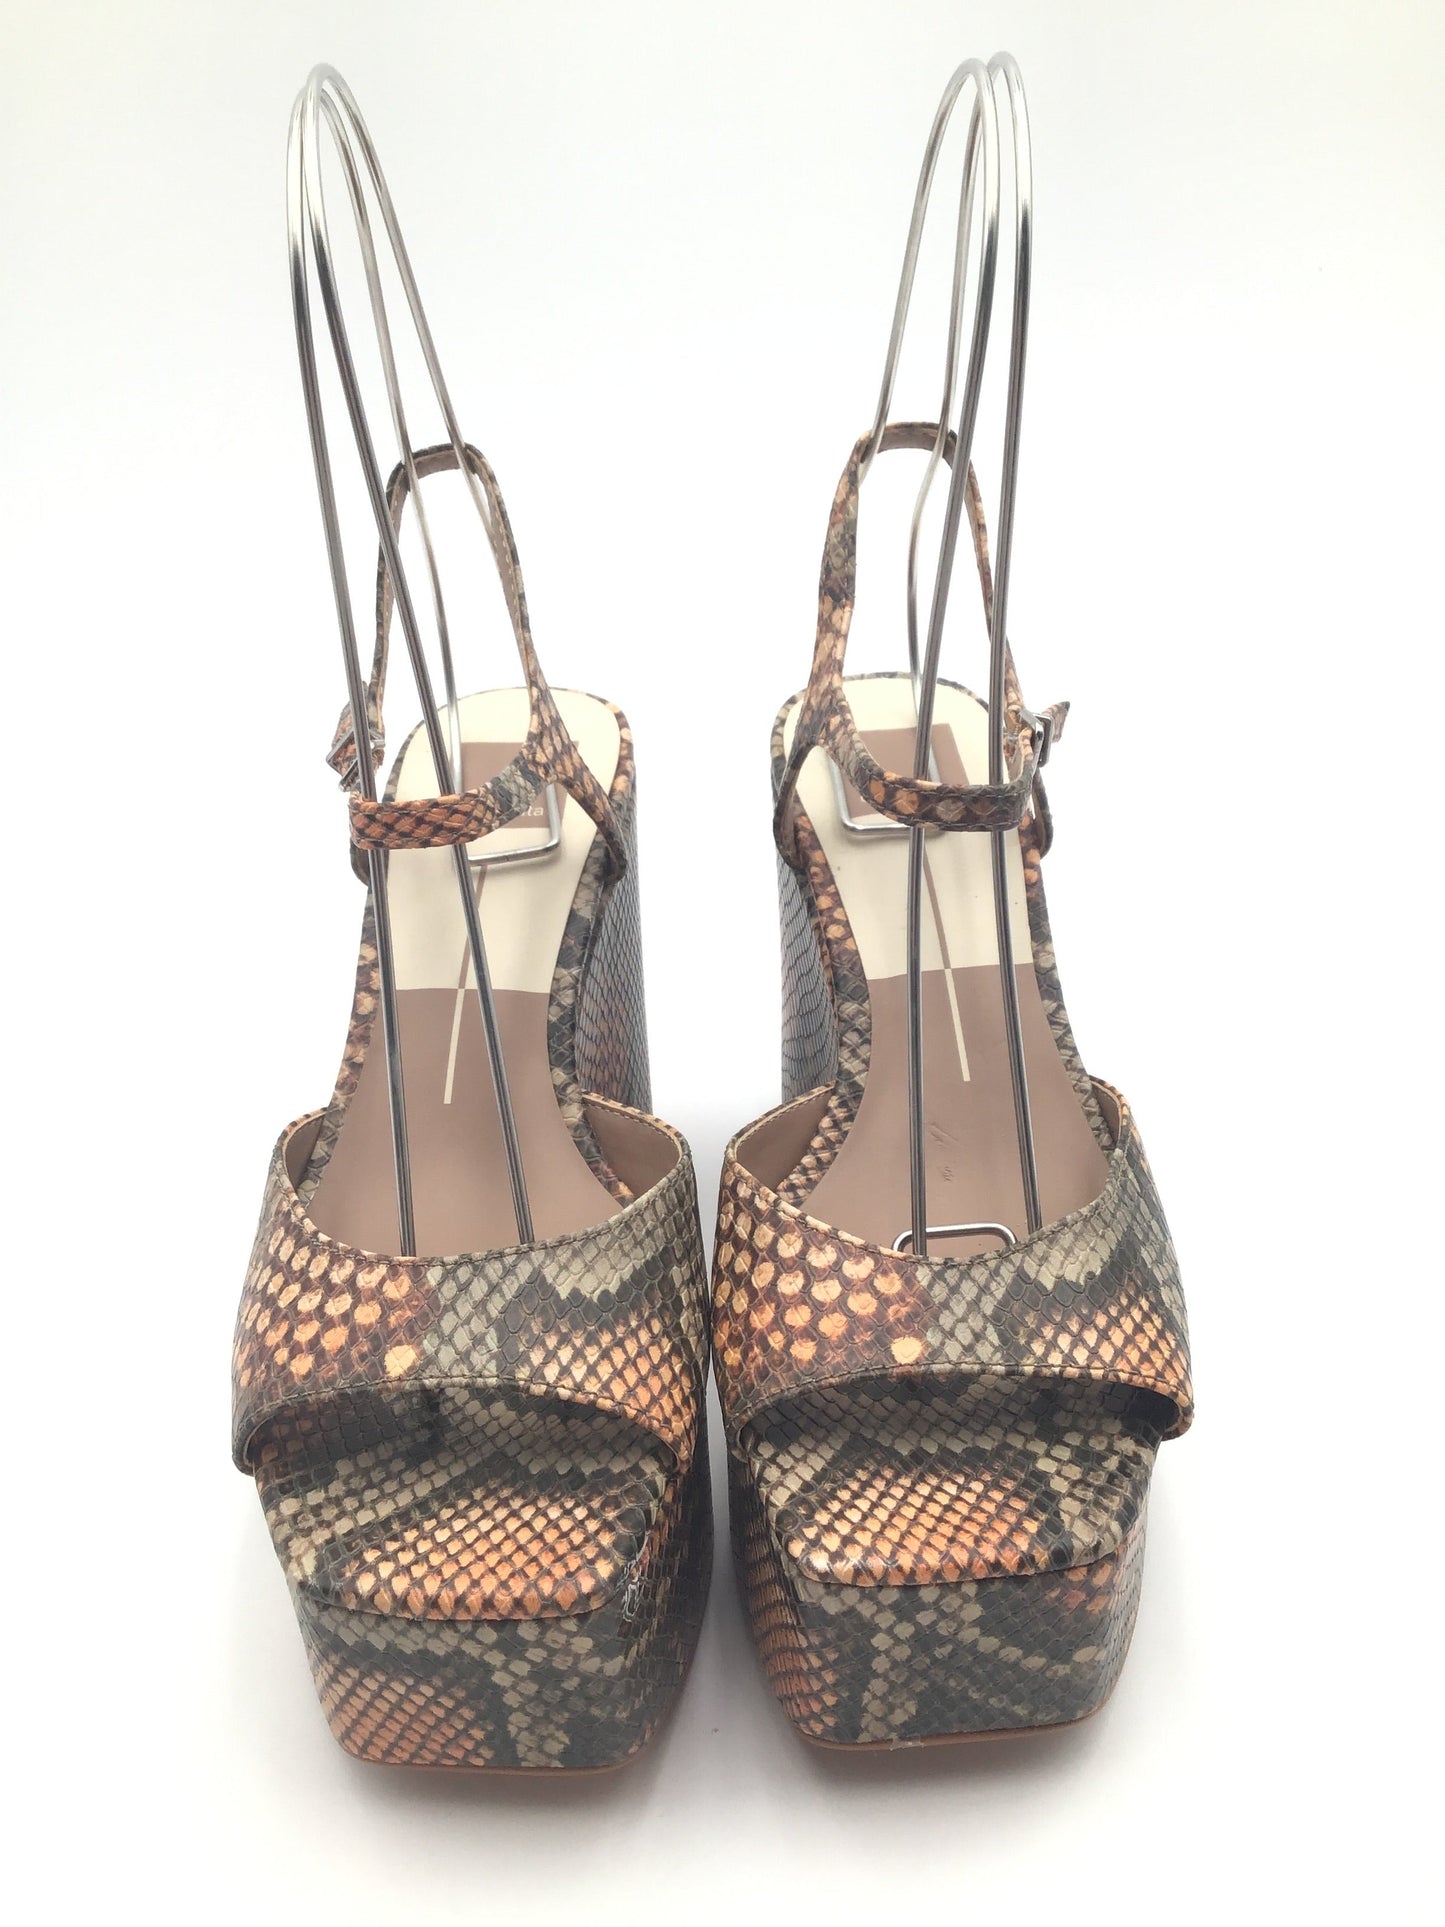 Snakeskin Print Sandals Heels Wedge Dolce Vita, Size 7